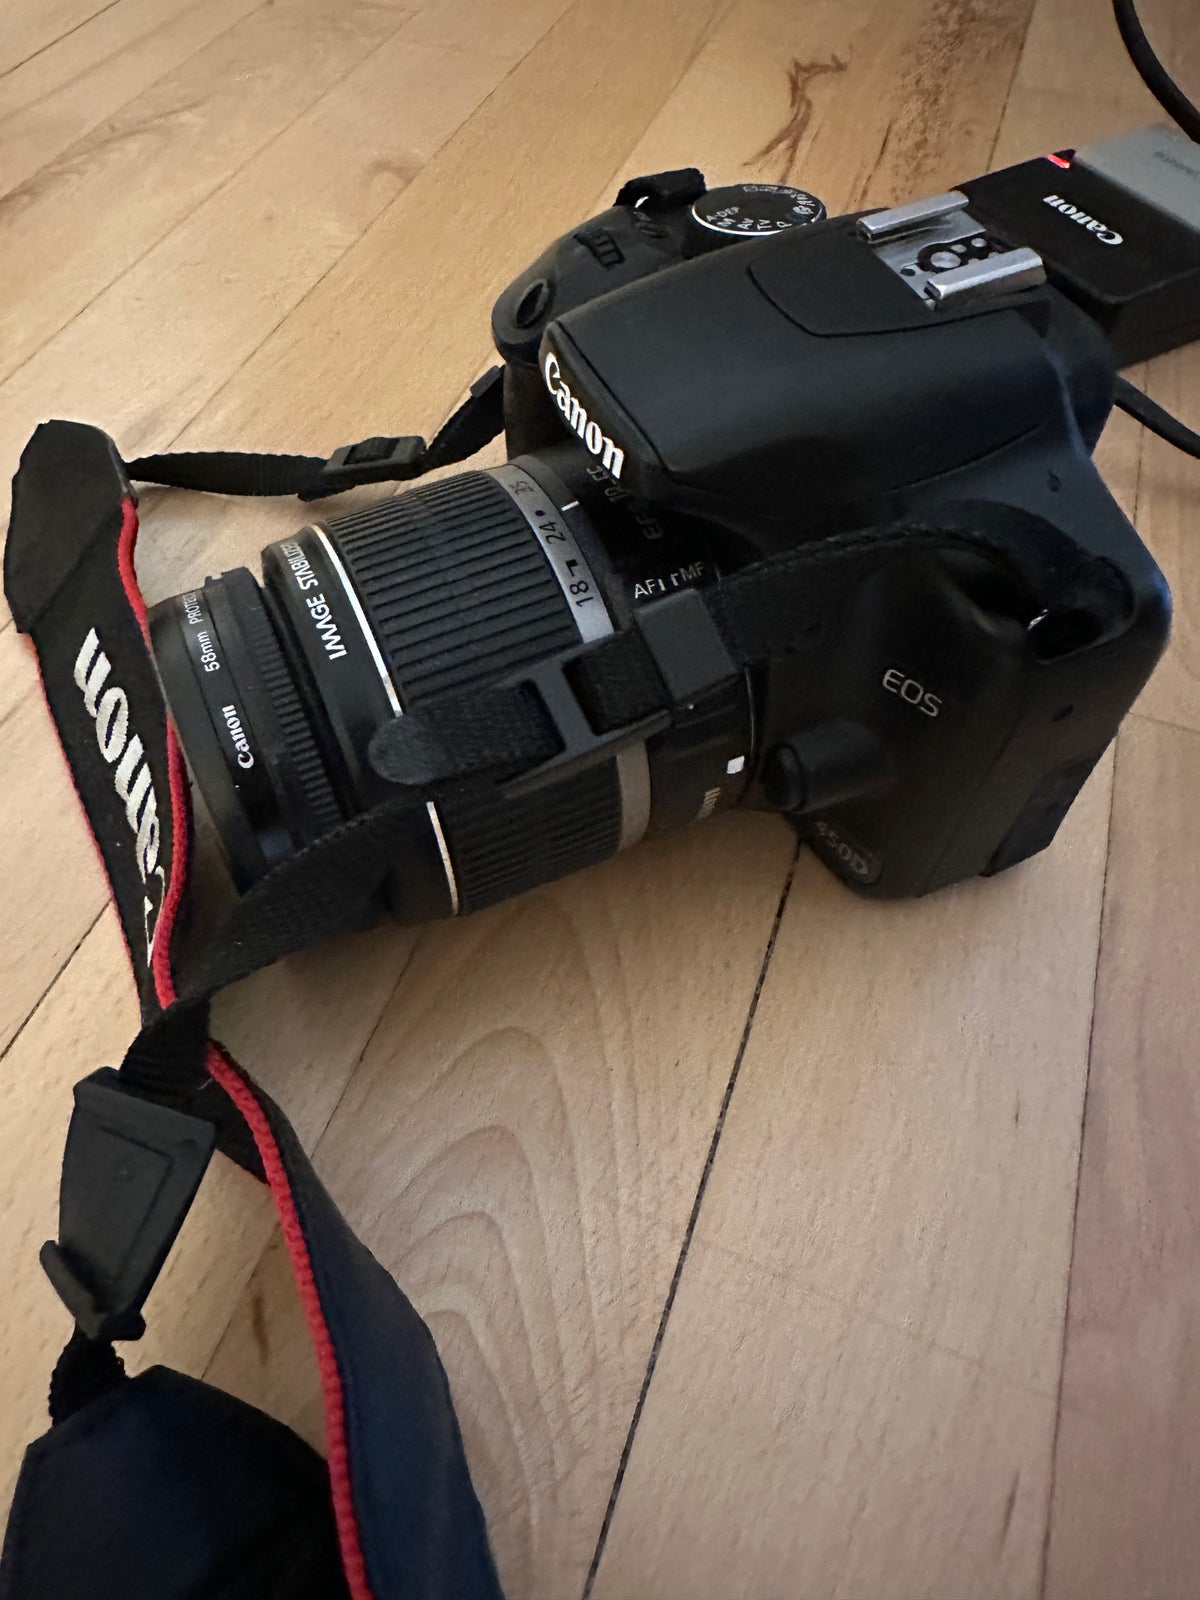 Canon, EOS 450D, spejlrefleks